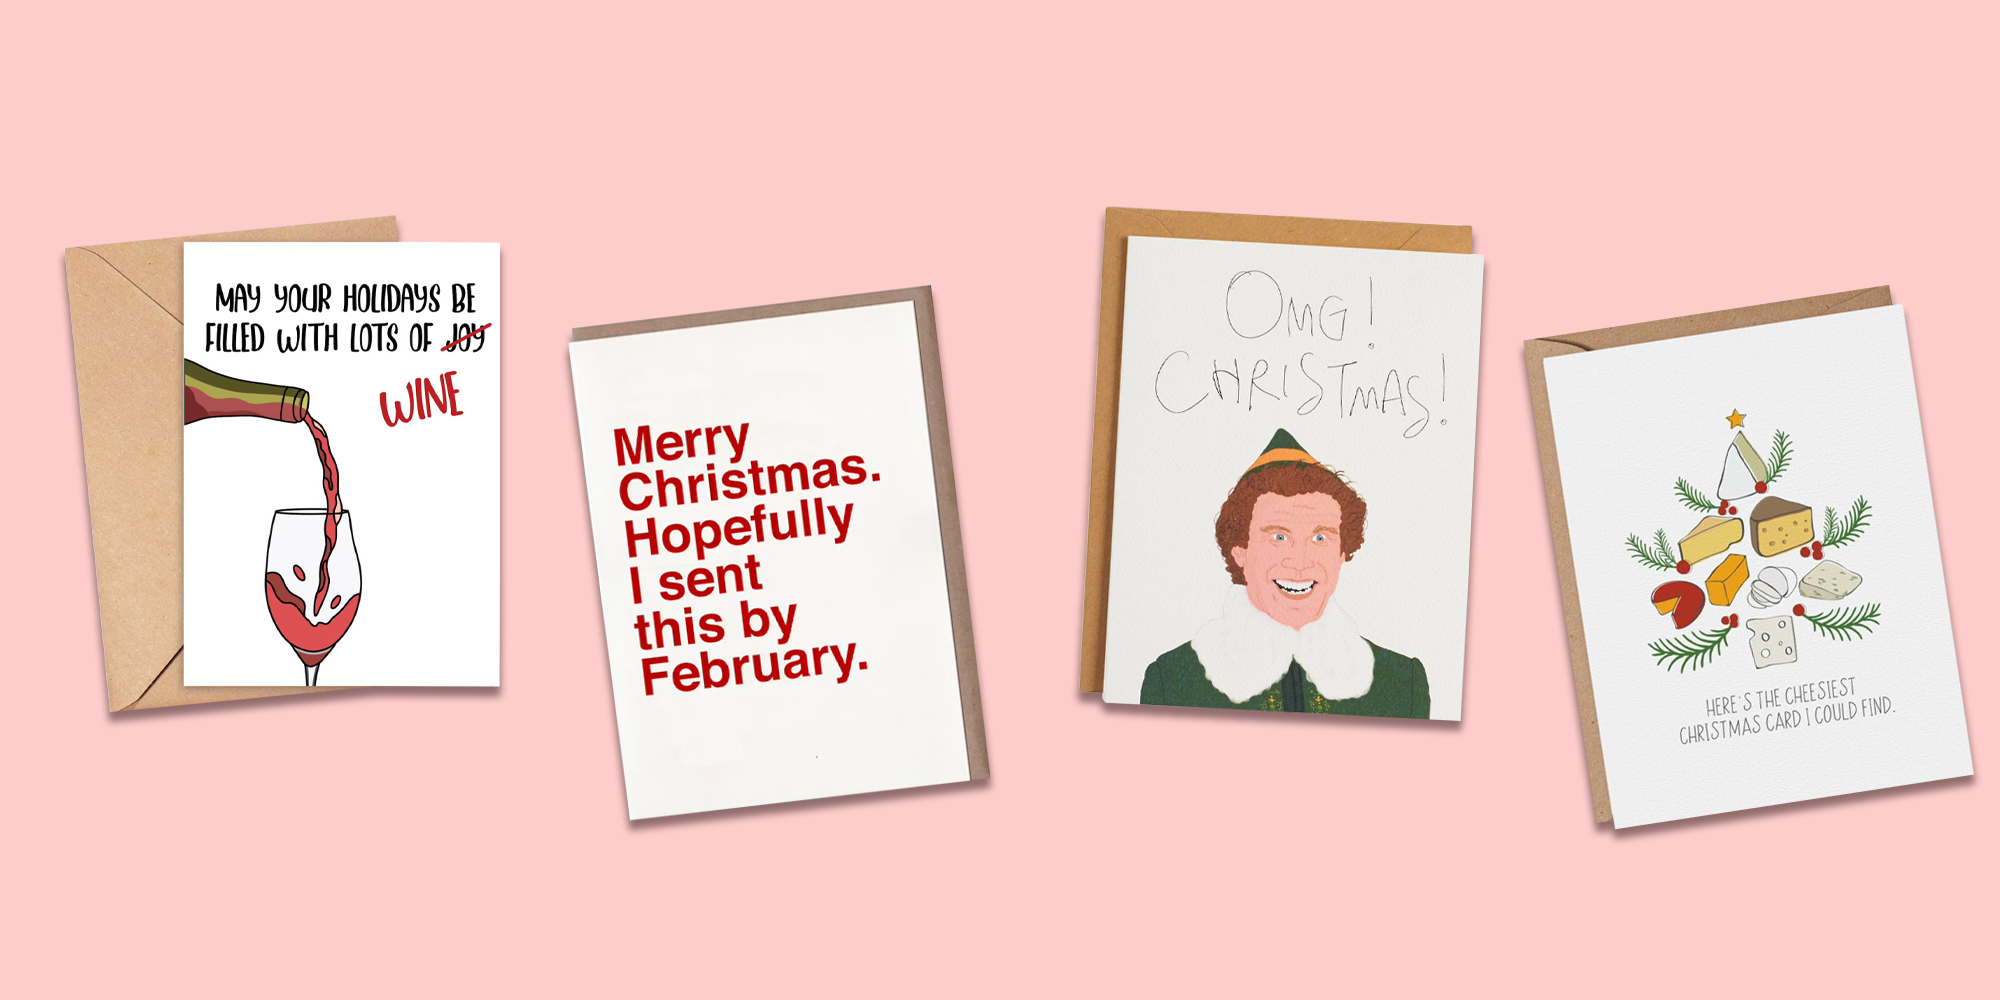 Funny Greeting Card Christmas Christmas Card Holiday Card Warm Wishes Socks Greeting Card